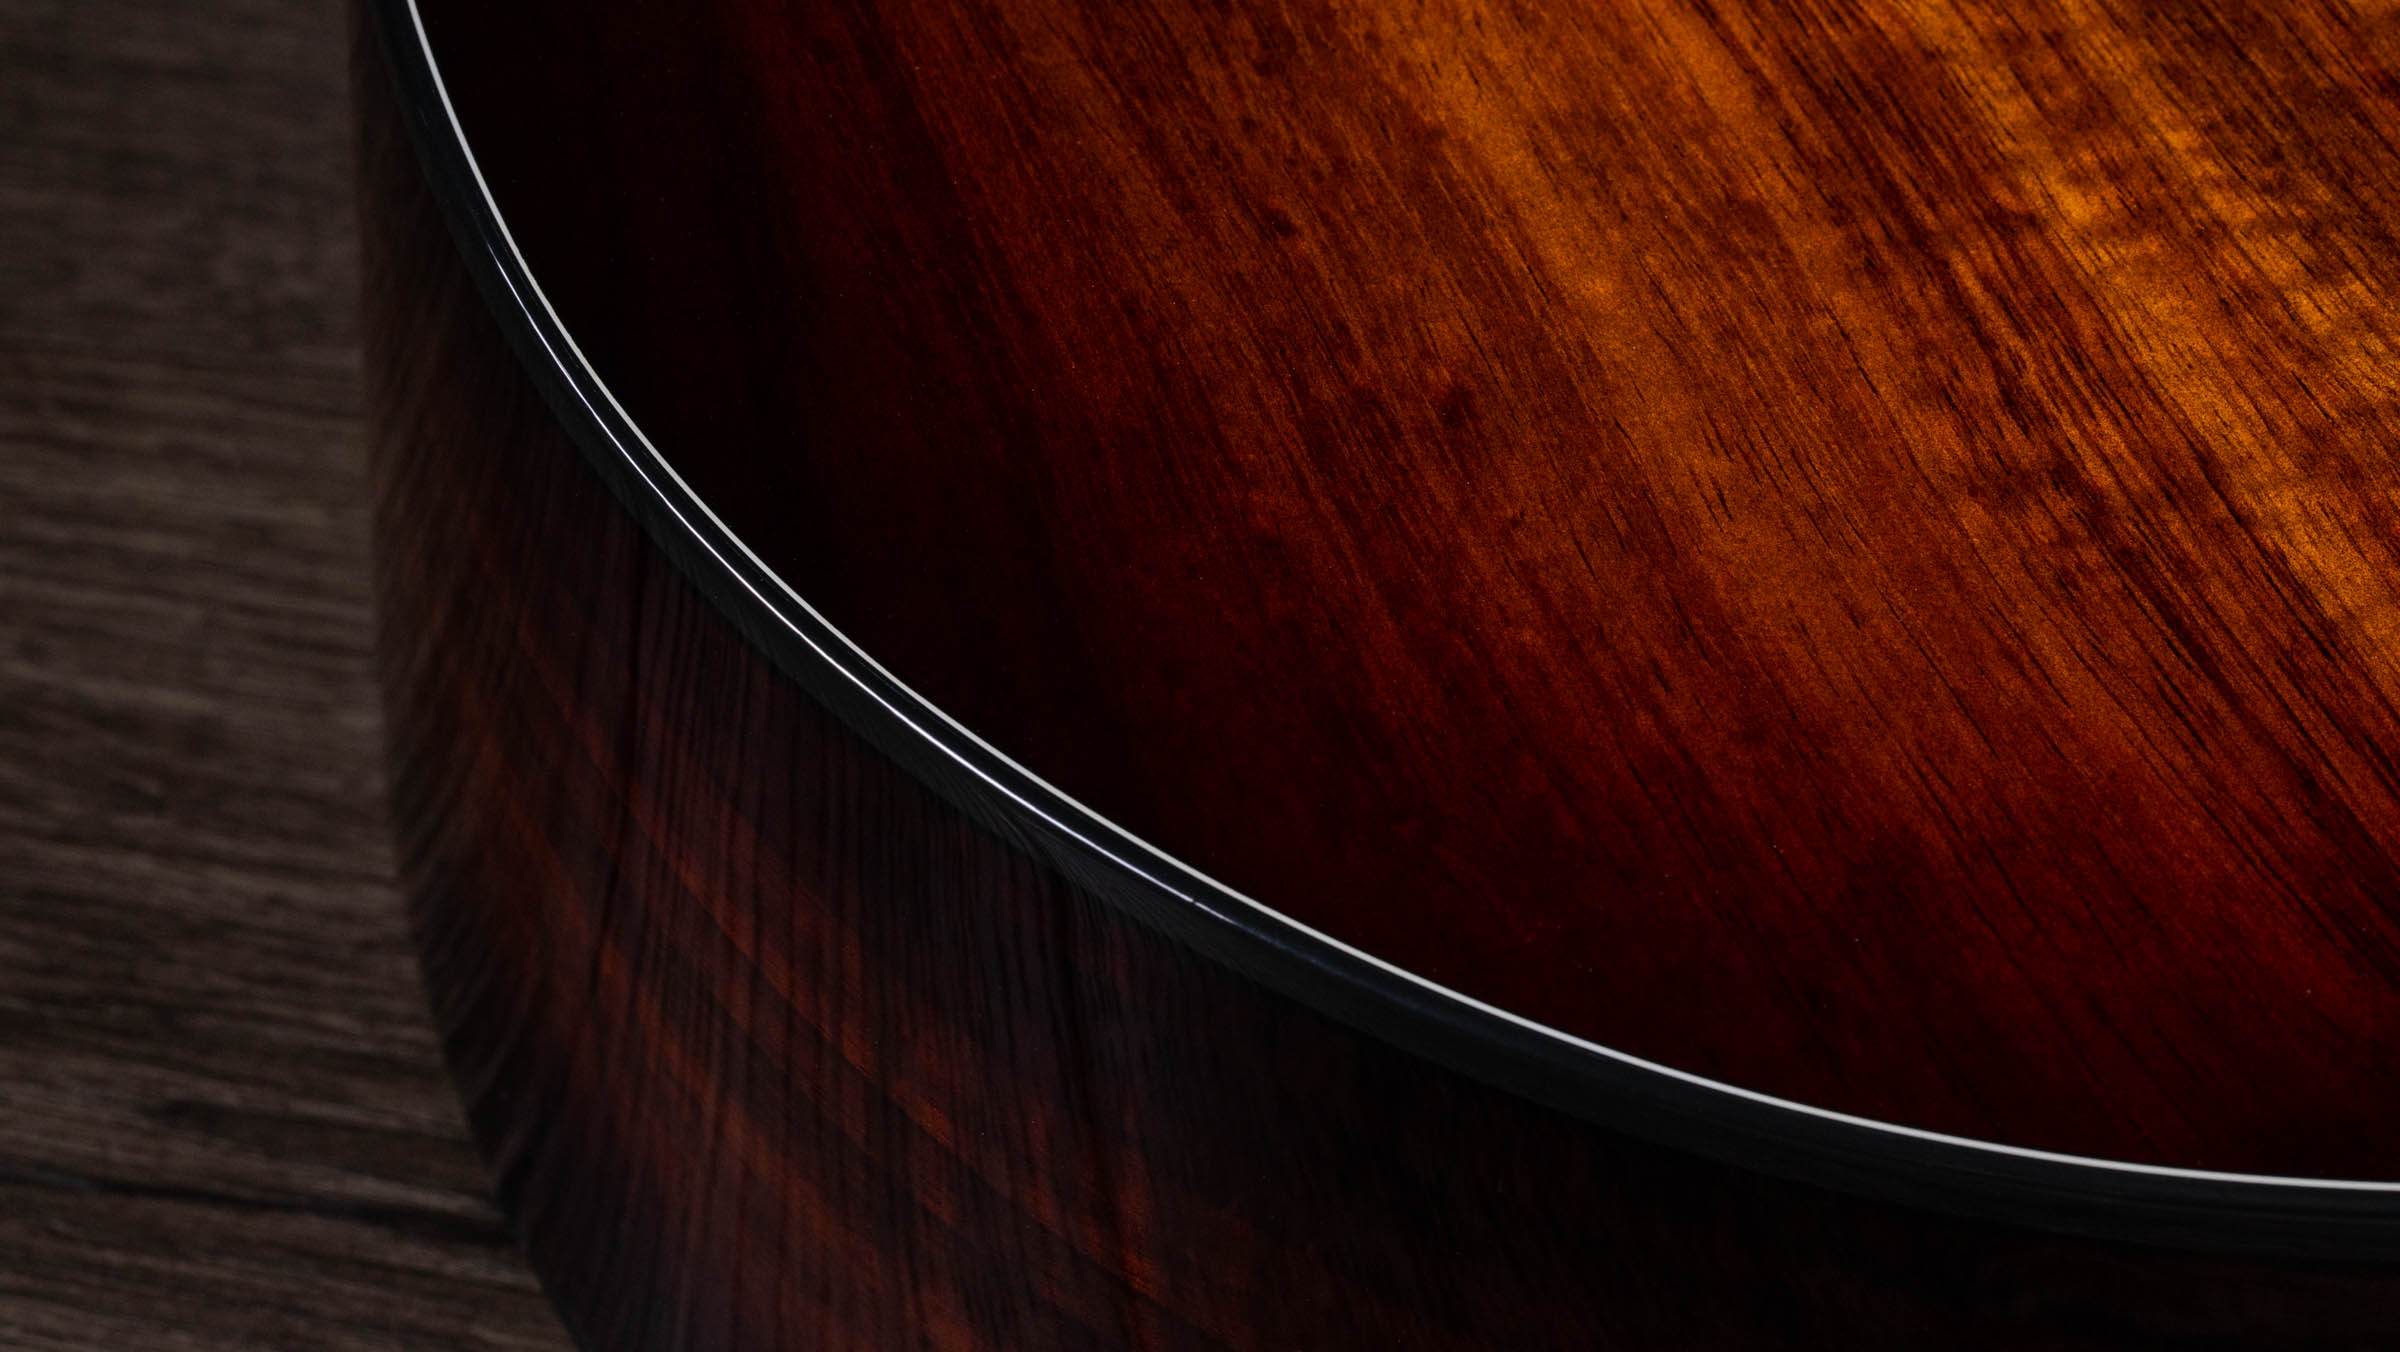 224ce-K DLX Hawaiian Koa Acoustic-Electric Guitar | Taylor Guitars